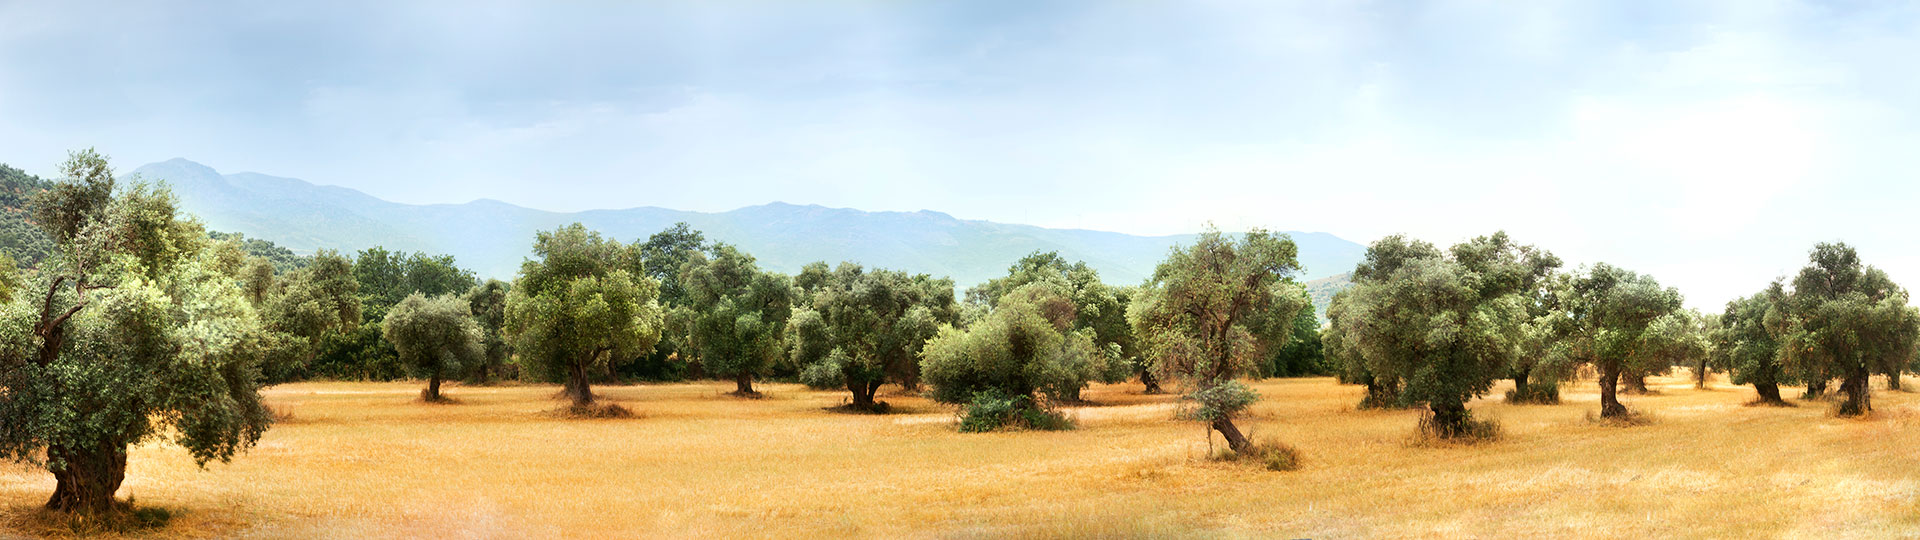 An olive grove